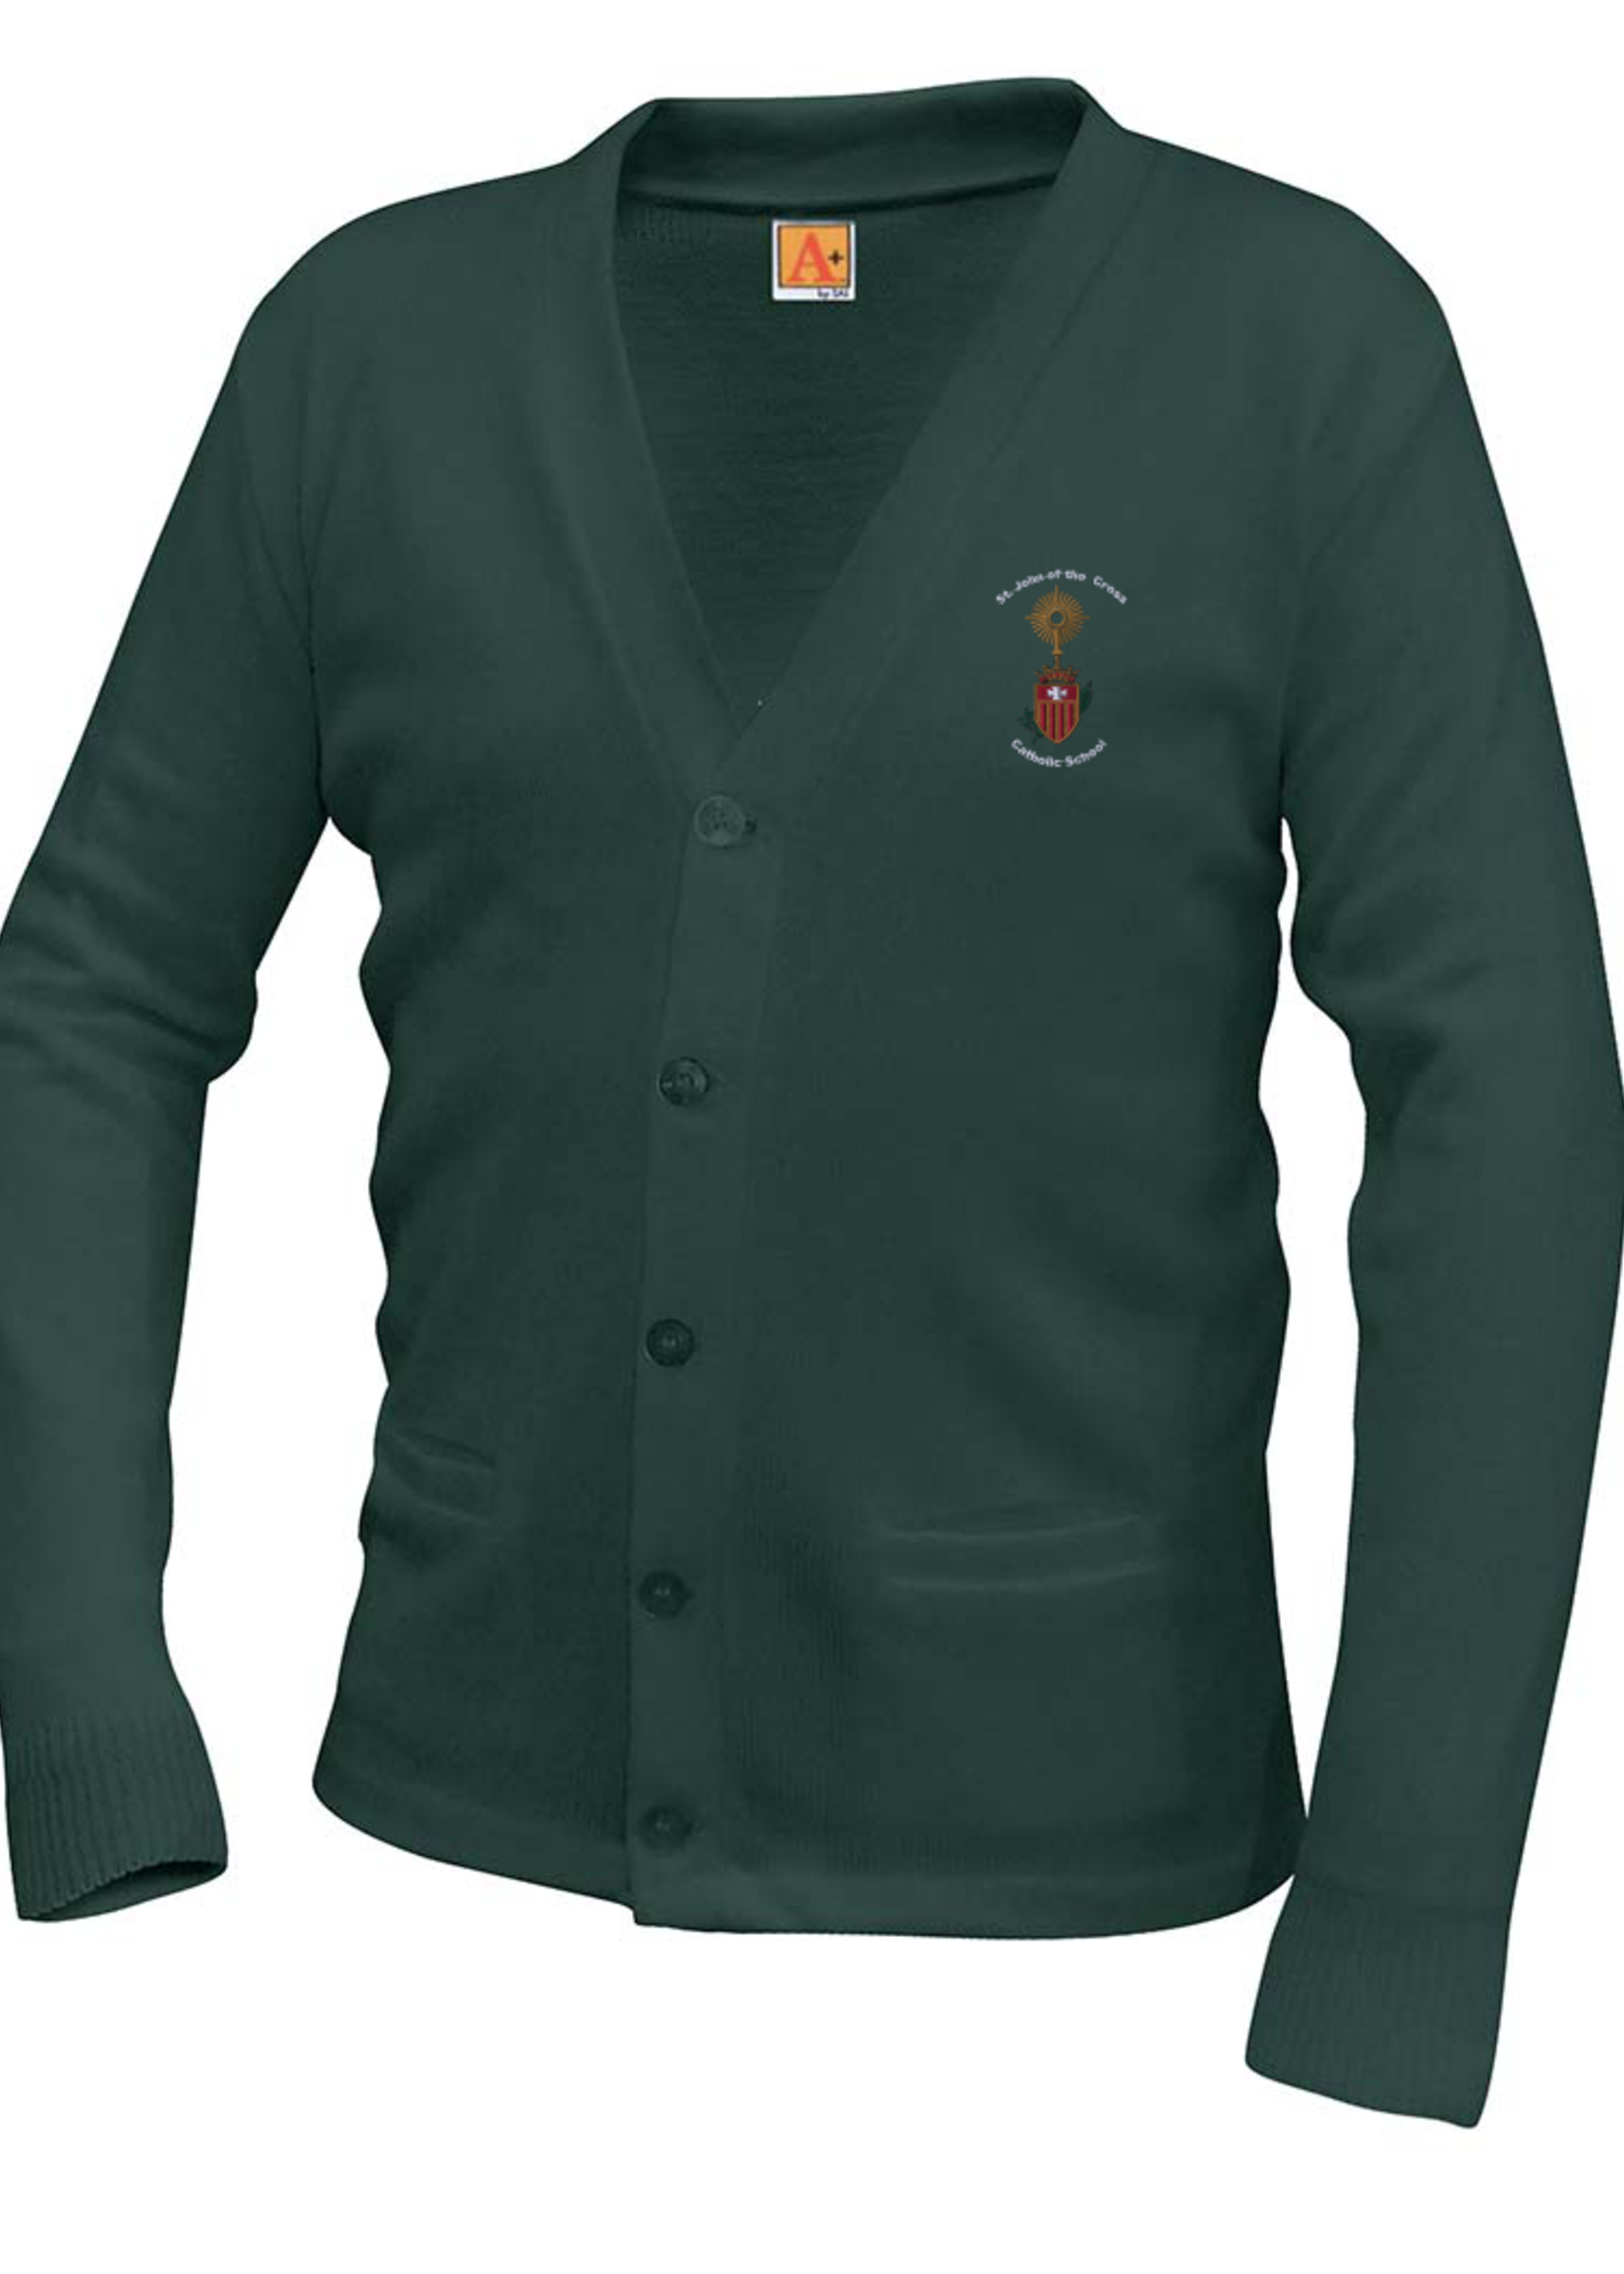 SJC Forest V-neck cardigan sweater with pockets